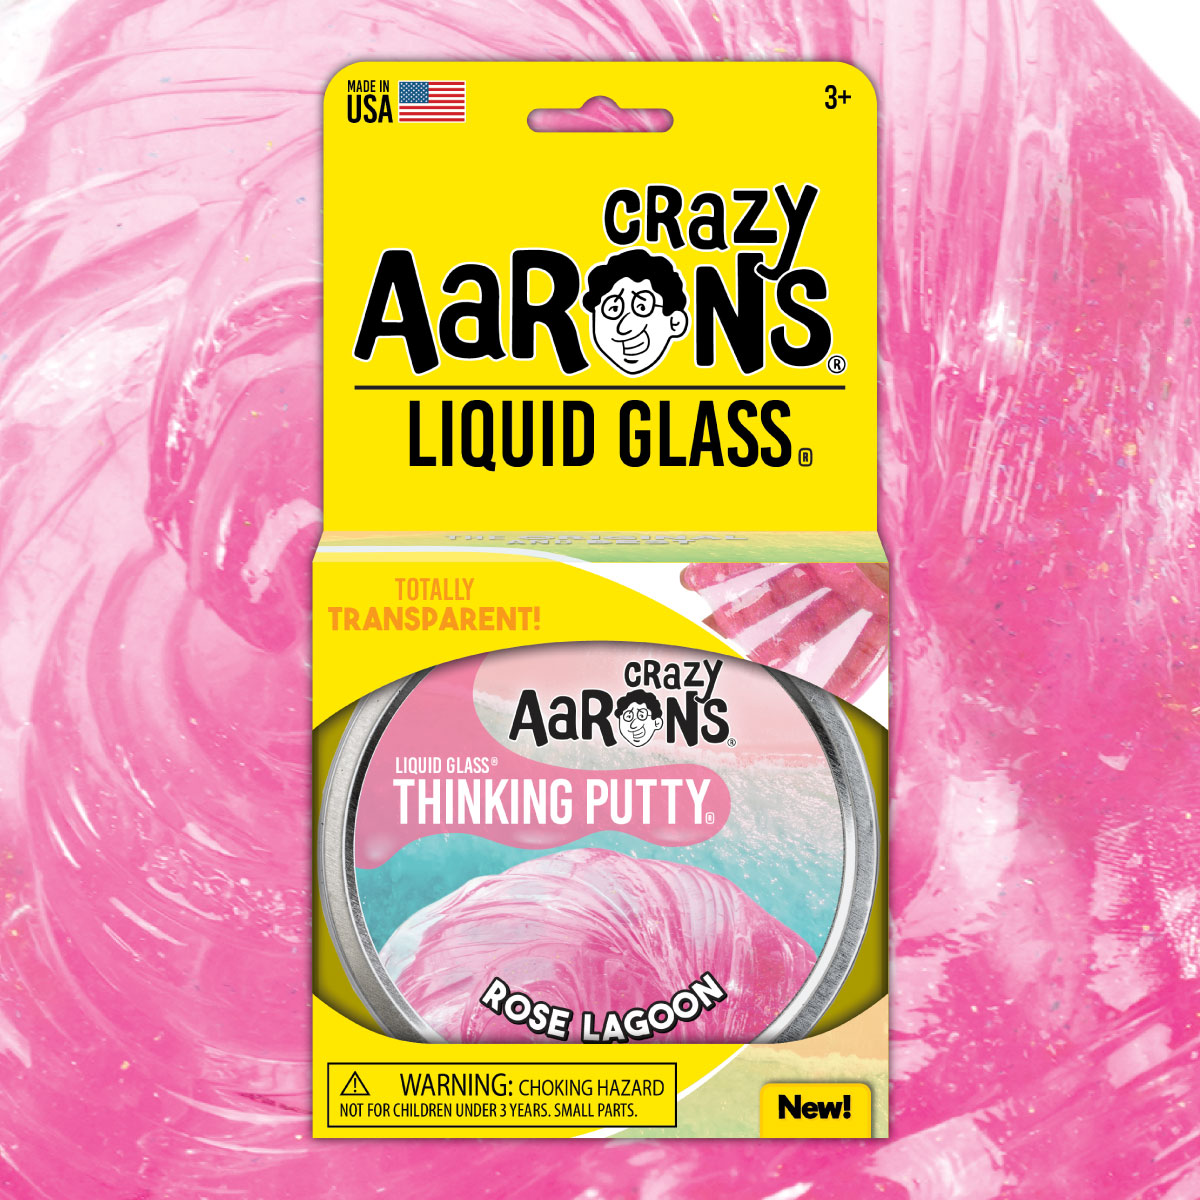 Crazy Aaron's Thinking Putty Liquid Glass Rose Lagoon